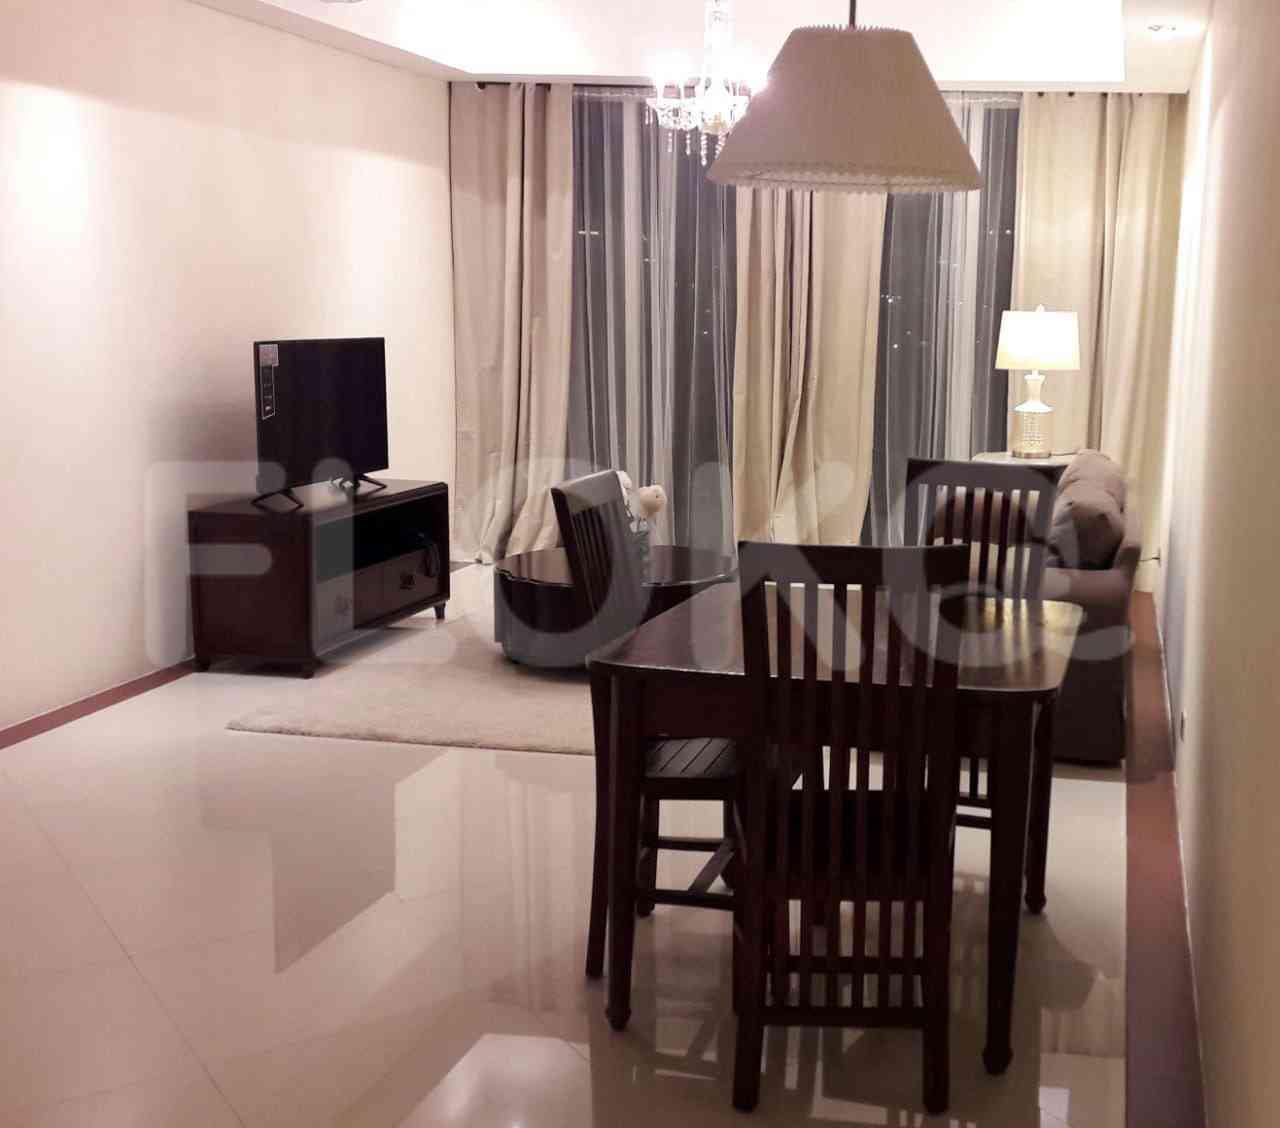 2 Bedroom on 12th Floor for Rent in Kemang Village Residence - fke493 3